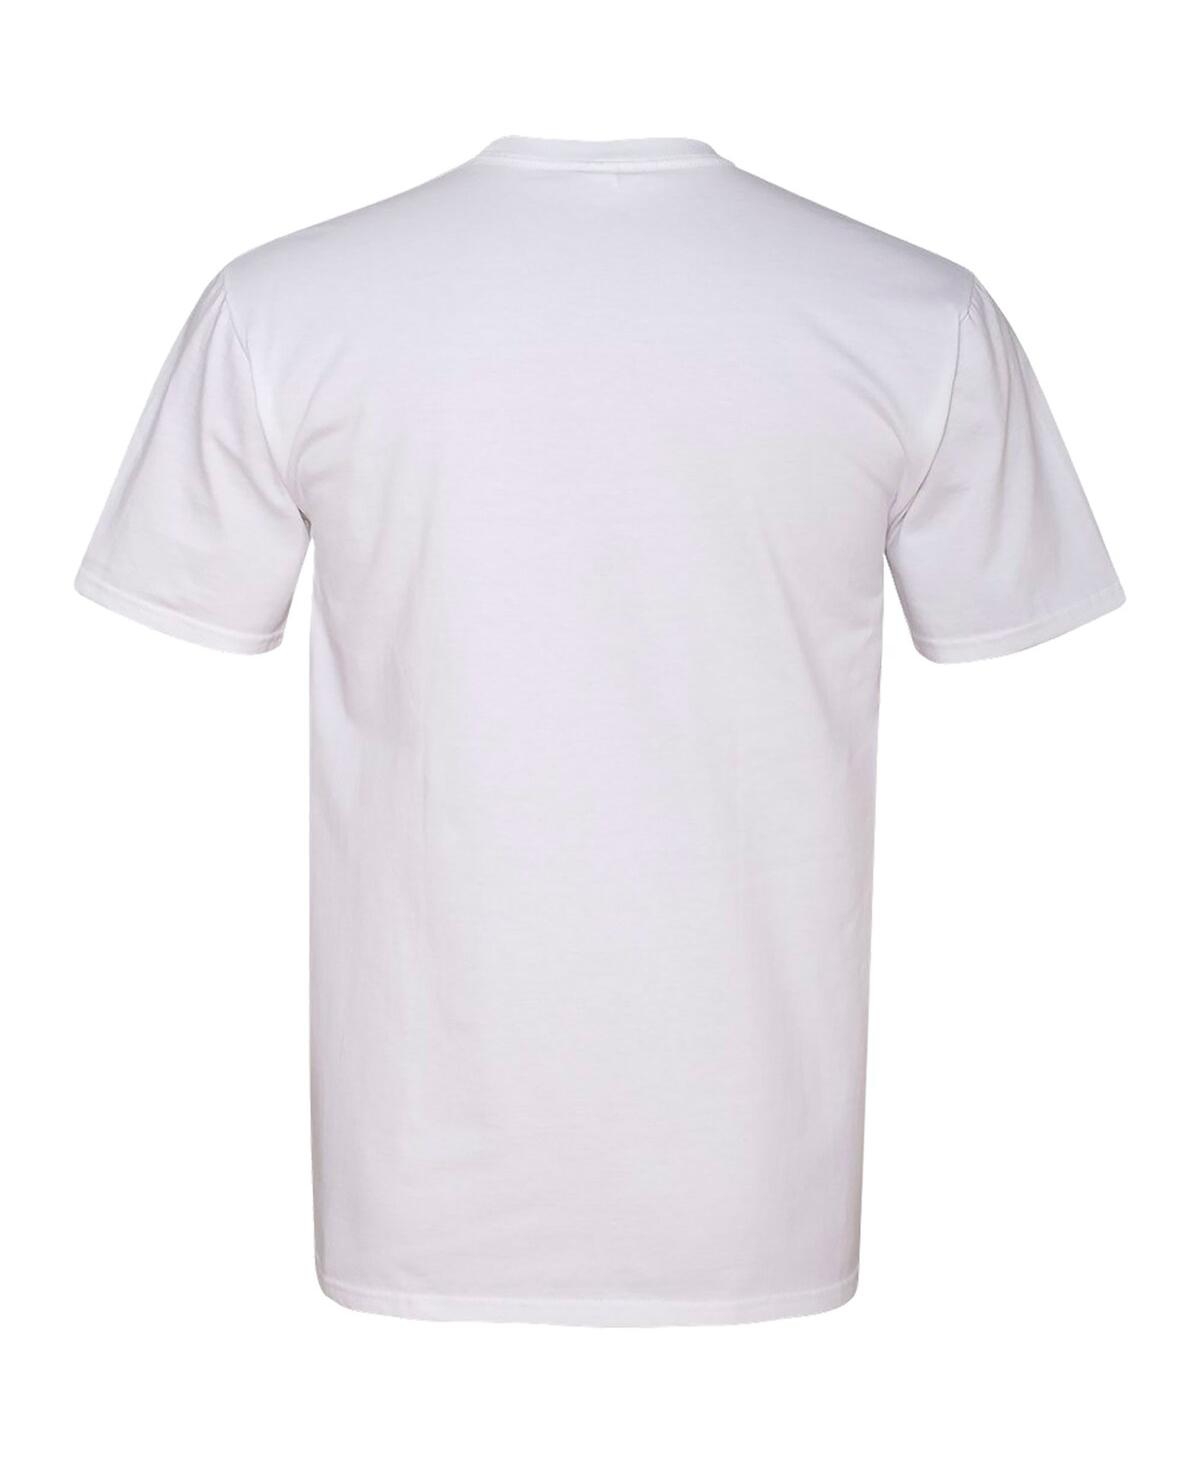 Shop Hendrick Motorsports Team Collection Men's  White Kyle Larson Throwback Car Tri-blend T-shirt